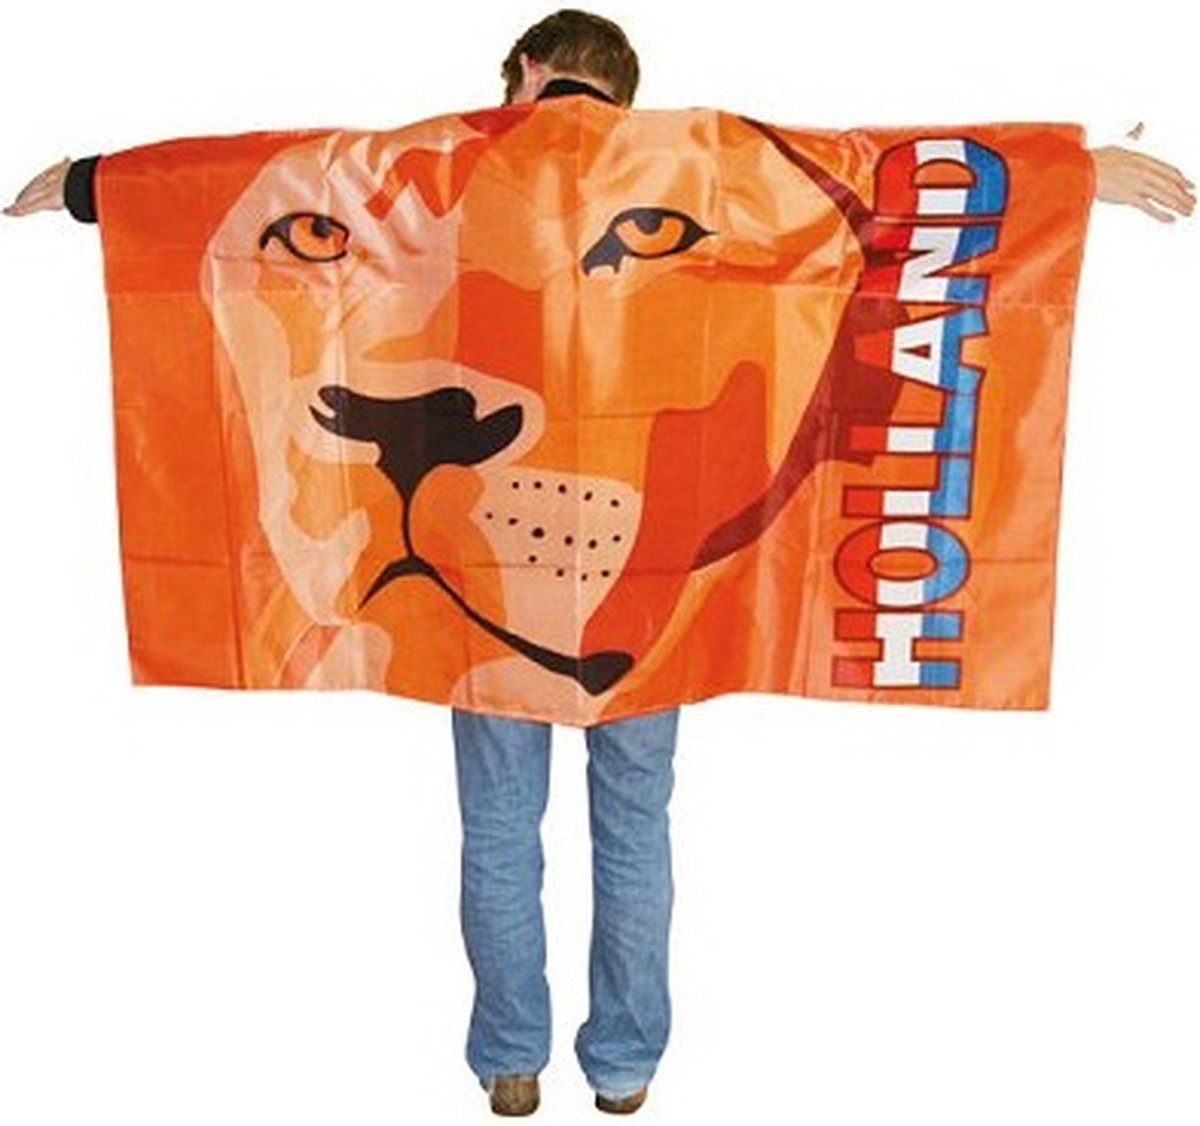 Kostuumvlag Oranje - Juich Cape Holland - WK 2022 voetbal Nederland